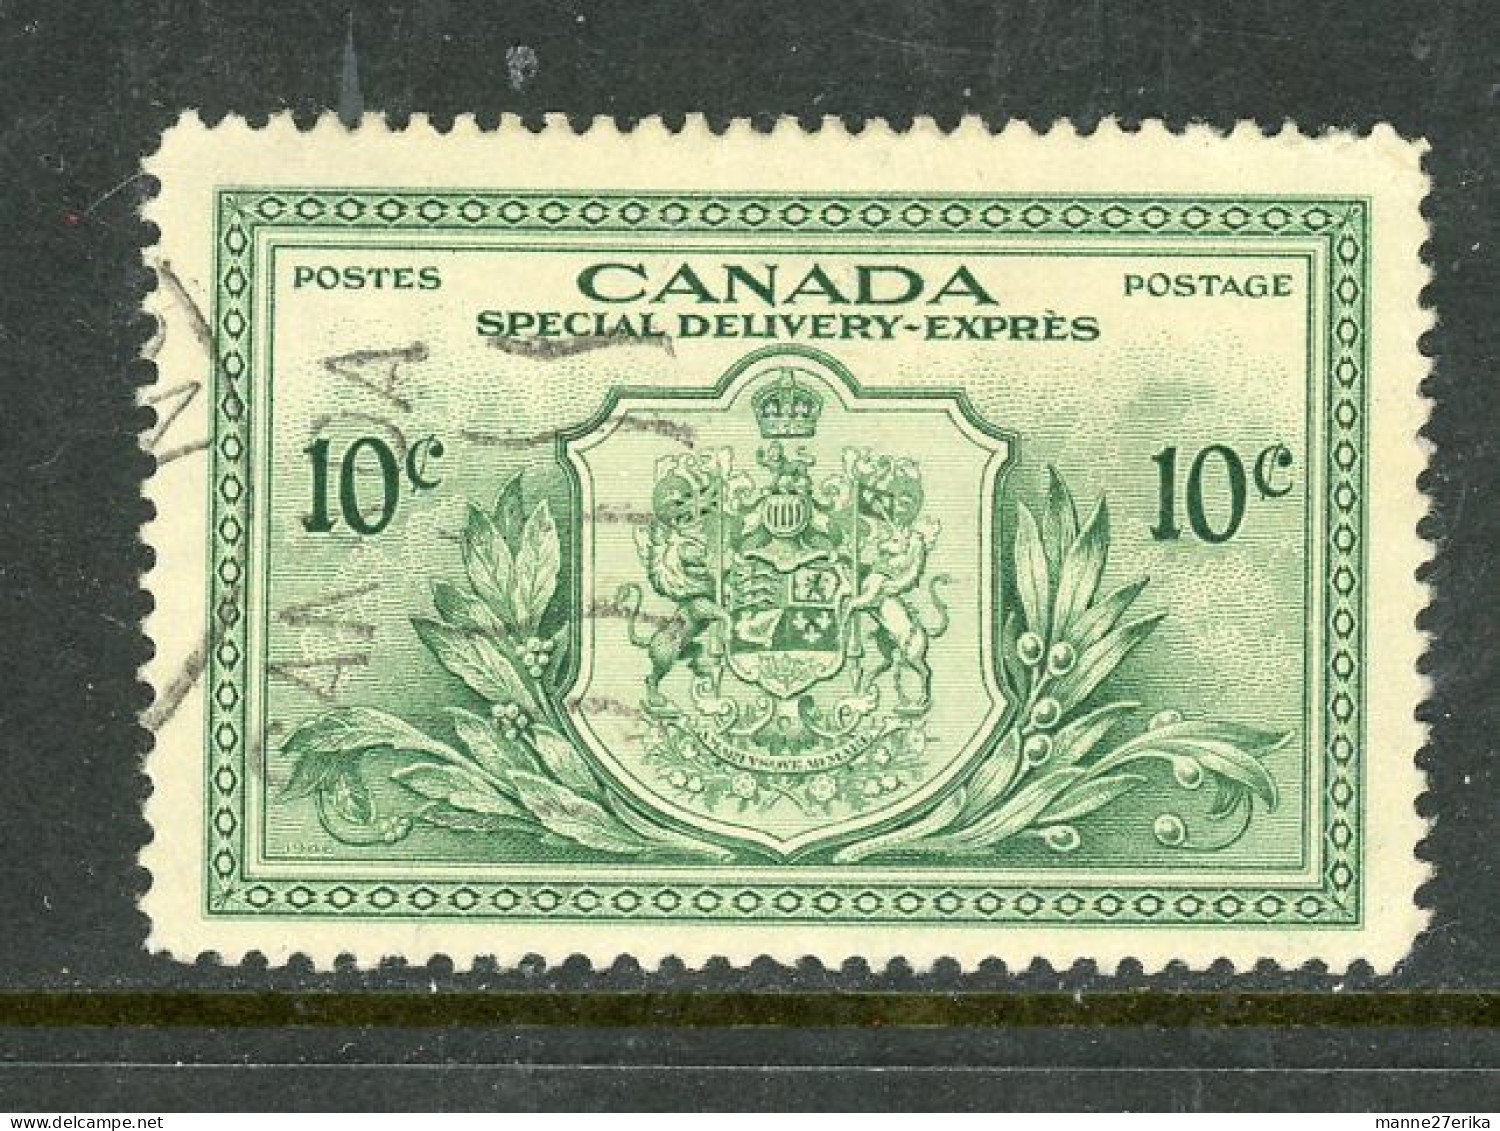 Canada USED 1935 - Oblitérés